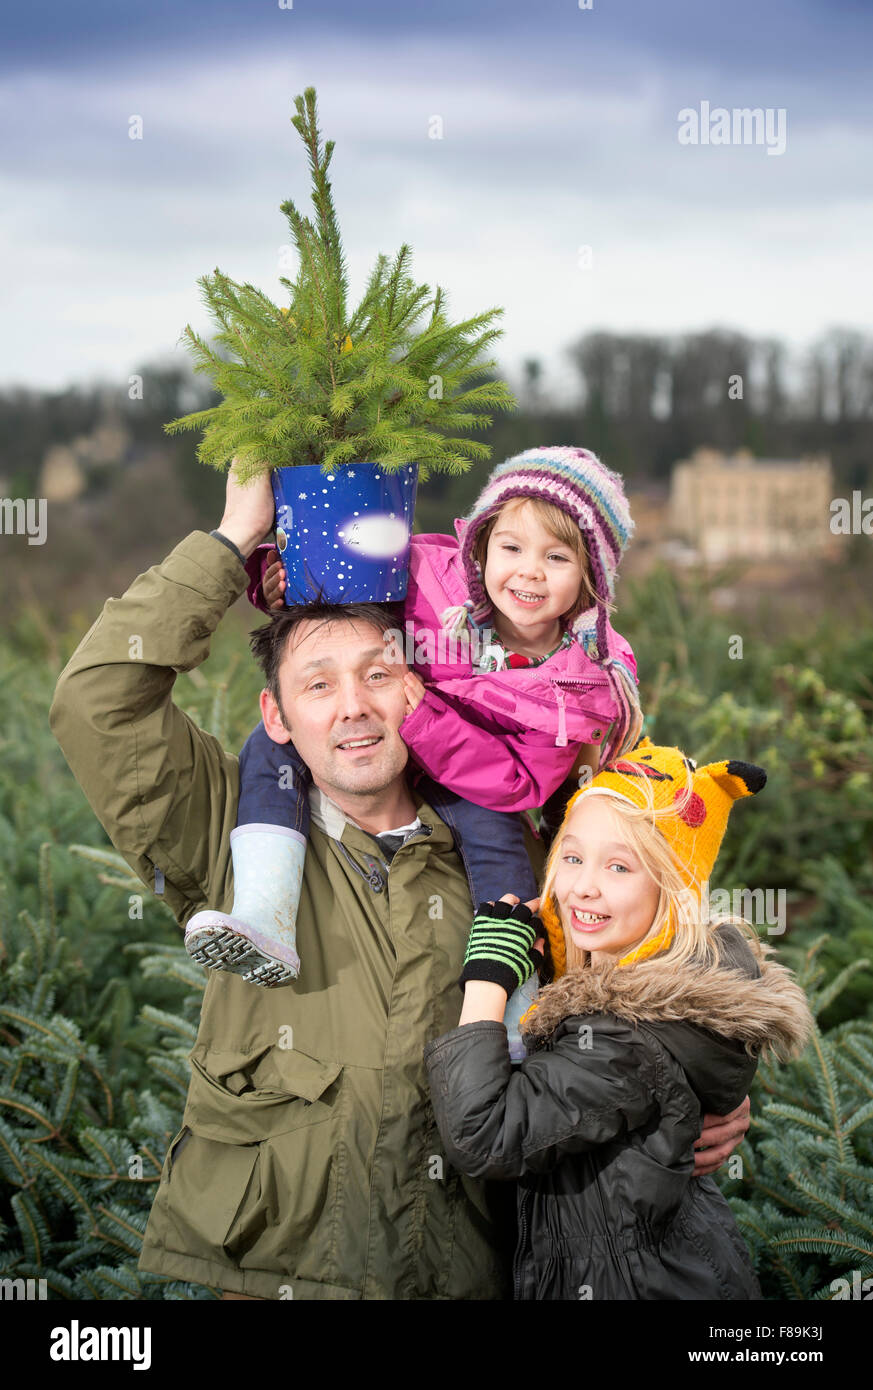 Christmas Xmas tree trees family buying collecting Stock Photo